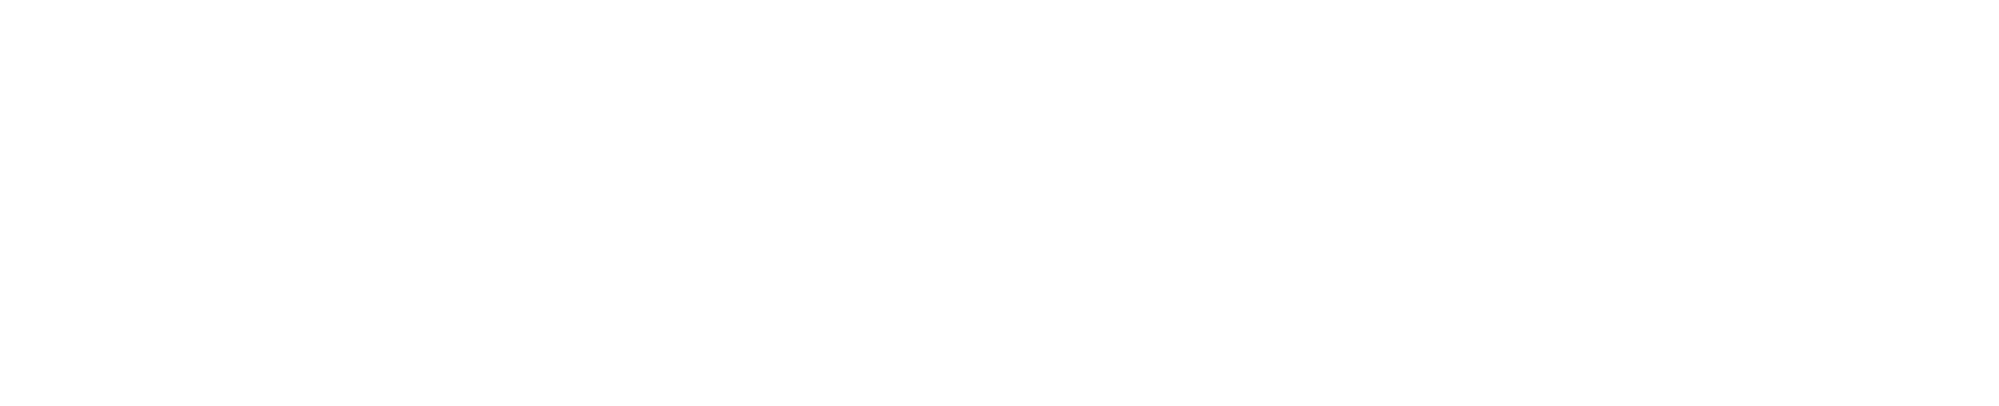 Abercrombie & Fitch logo